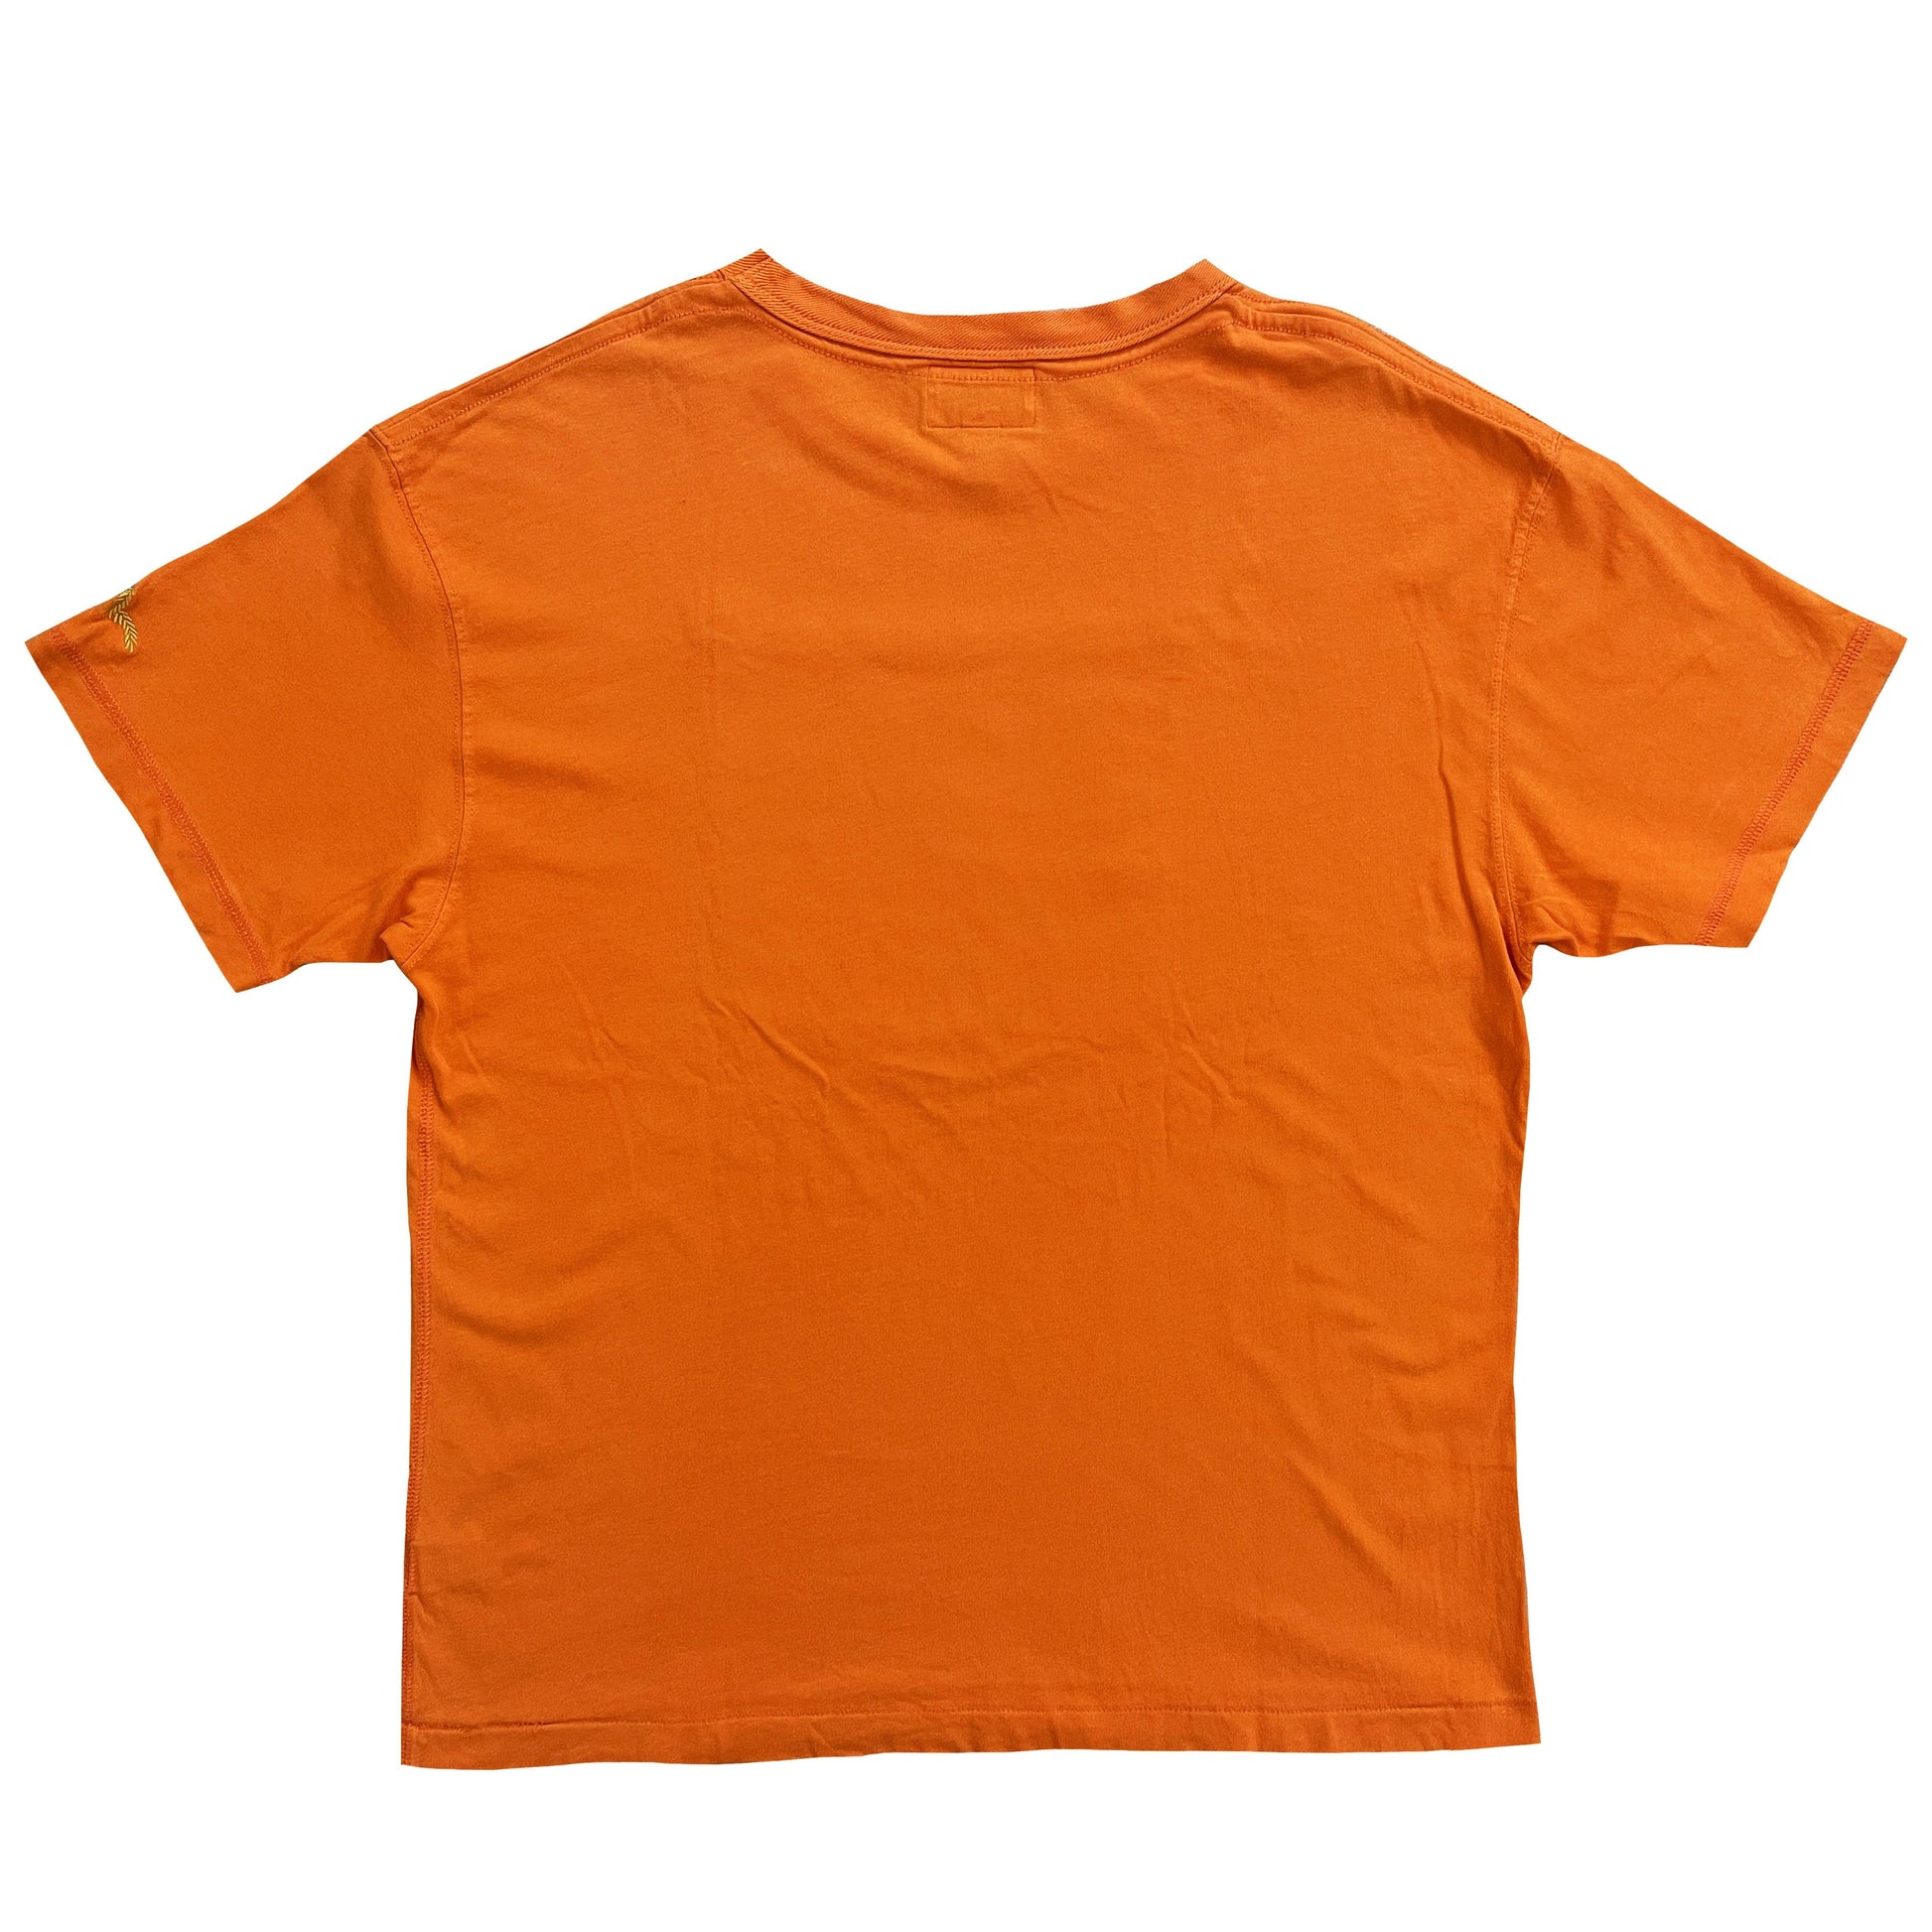 Evisu T-Shirt - Known Source